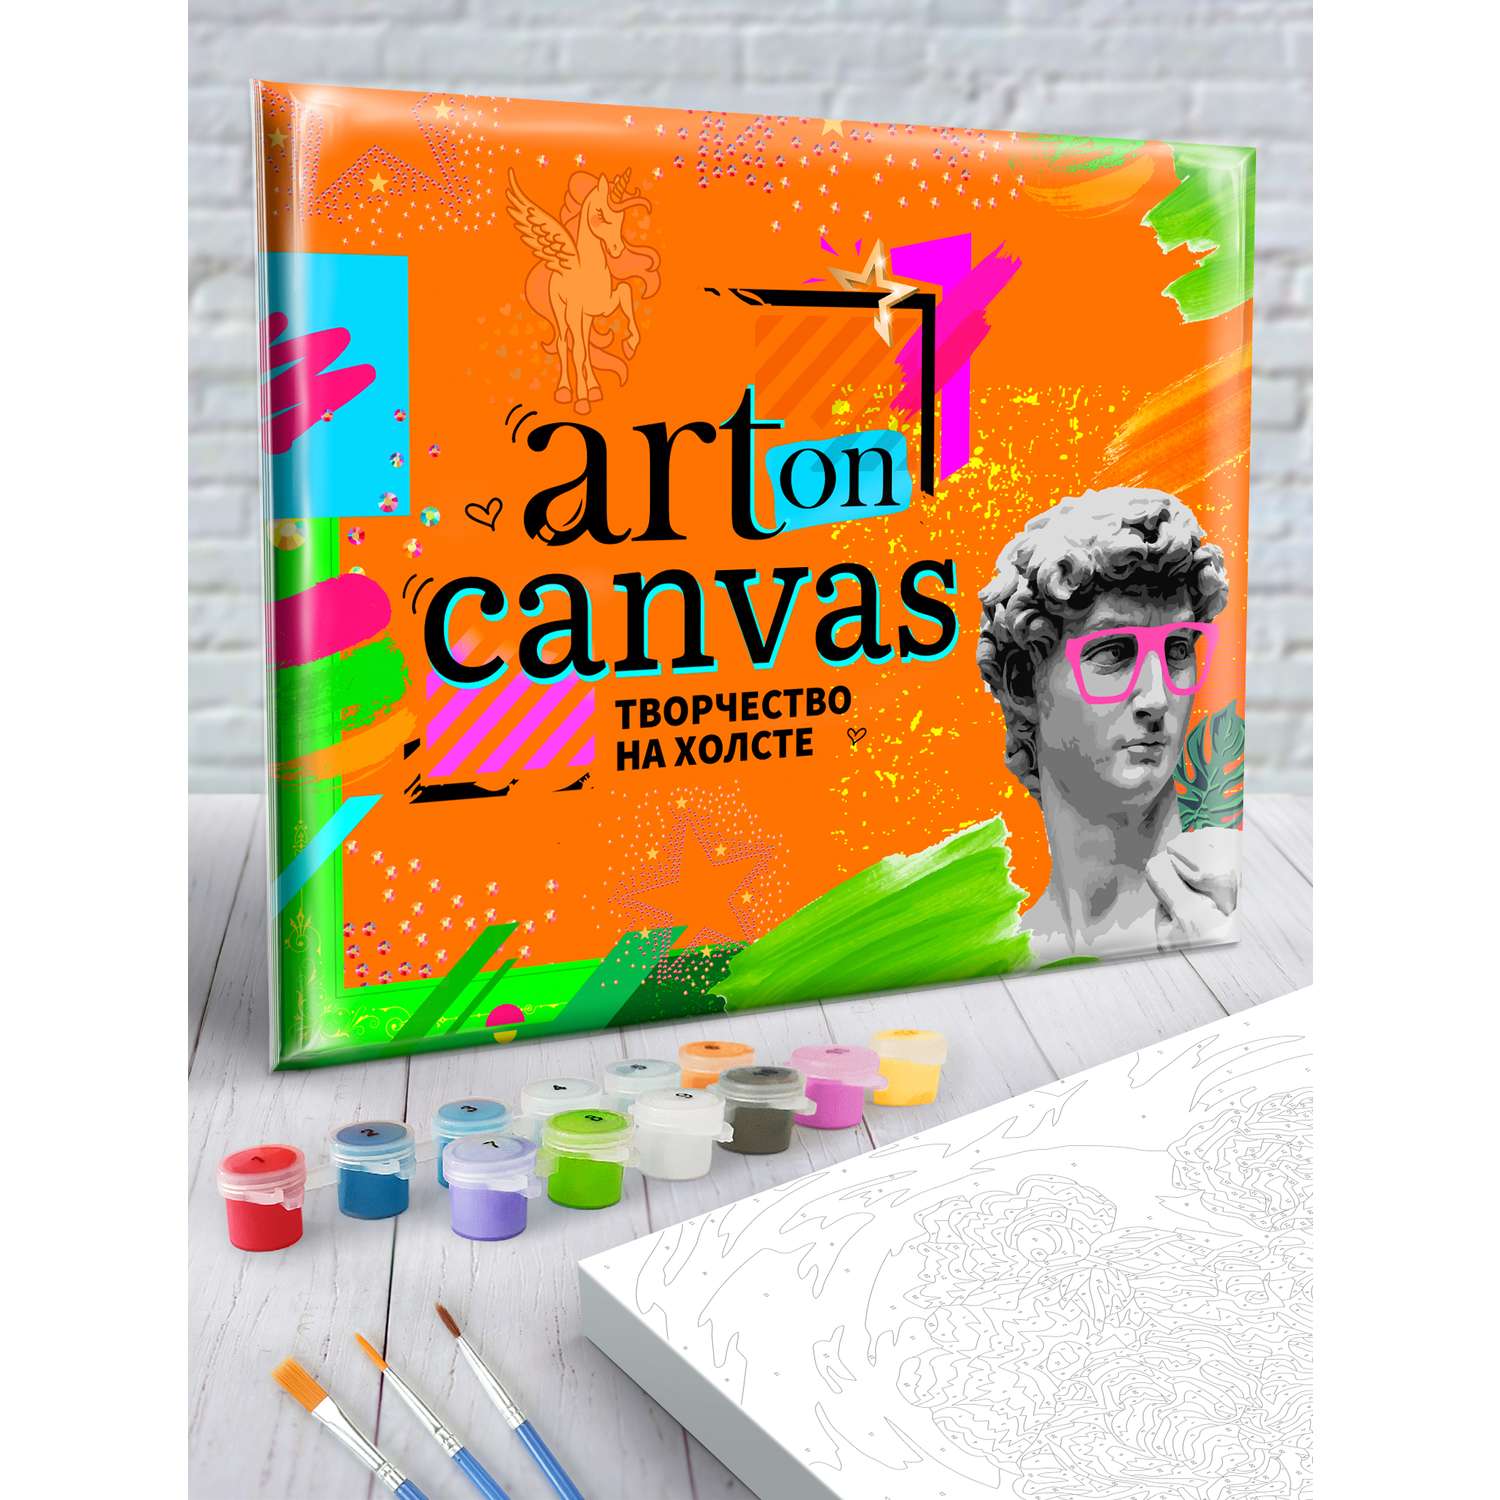 Картина по номерам Art on Canvas холст на подрамнике 40х50 см Авангард-Джаконда - фото 9